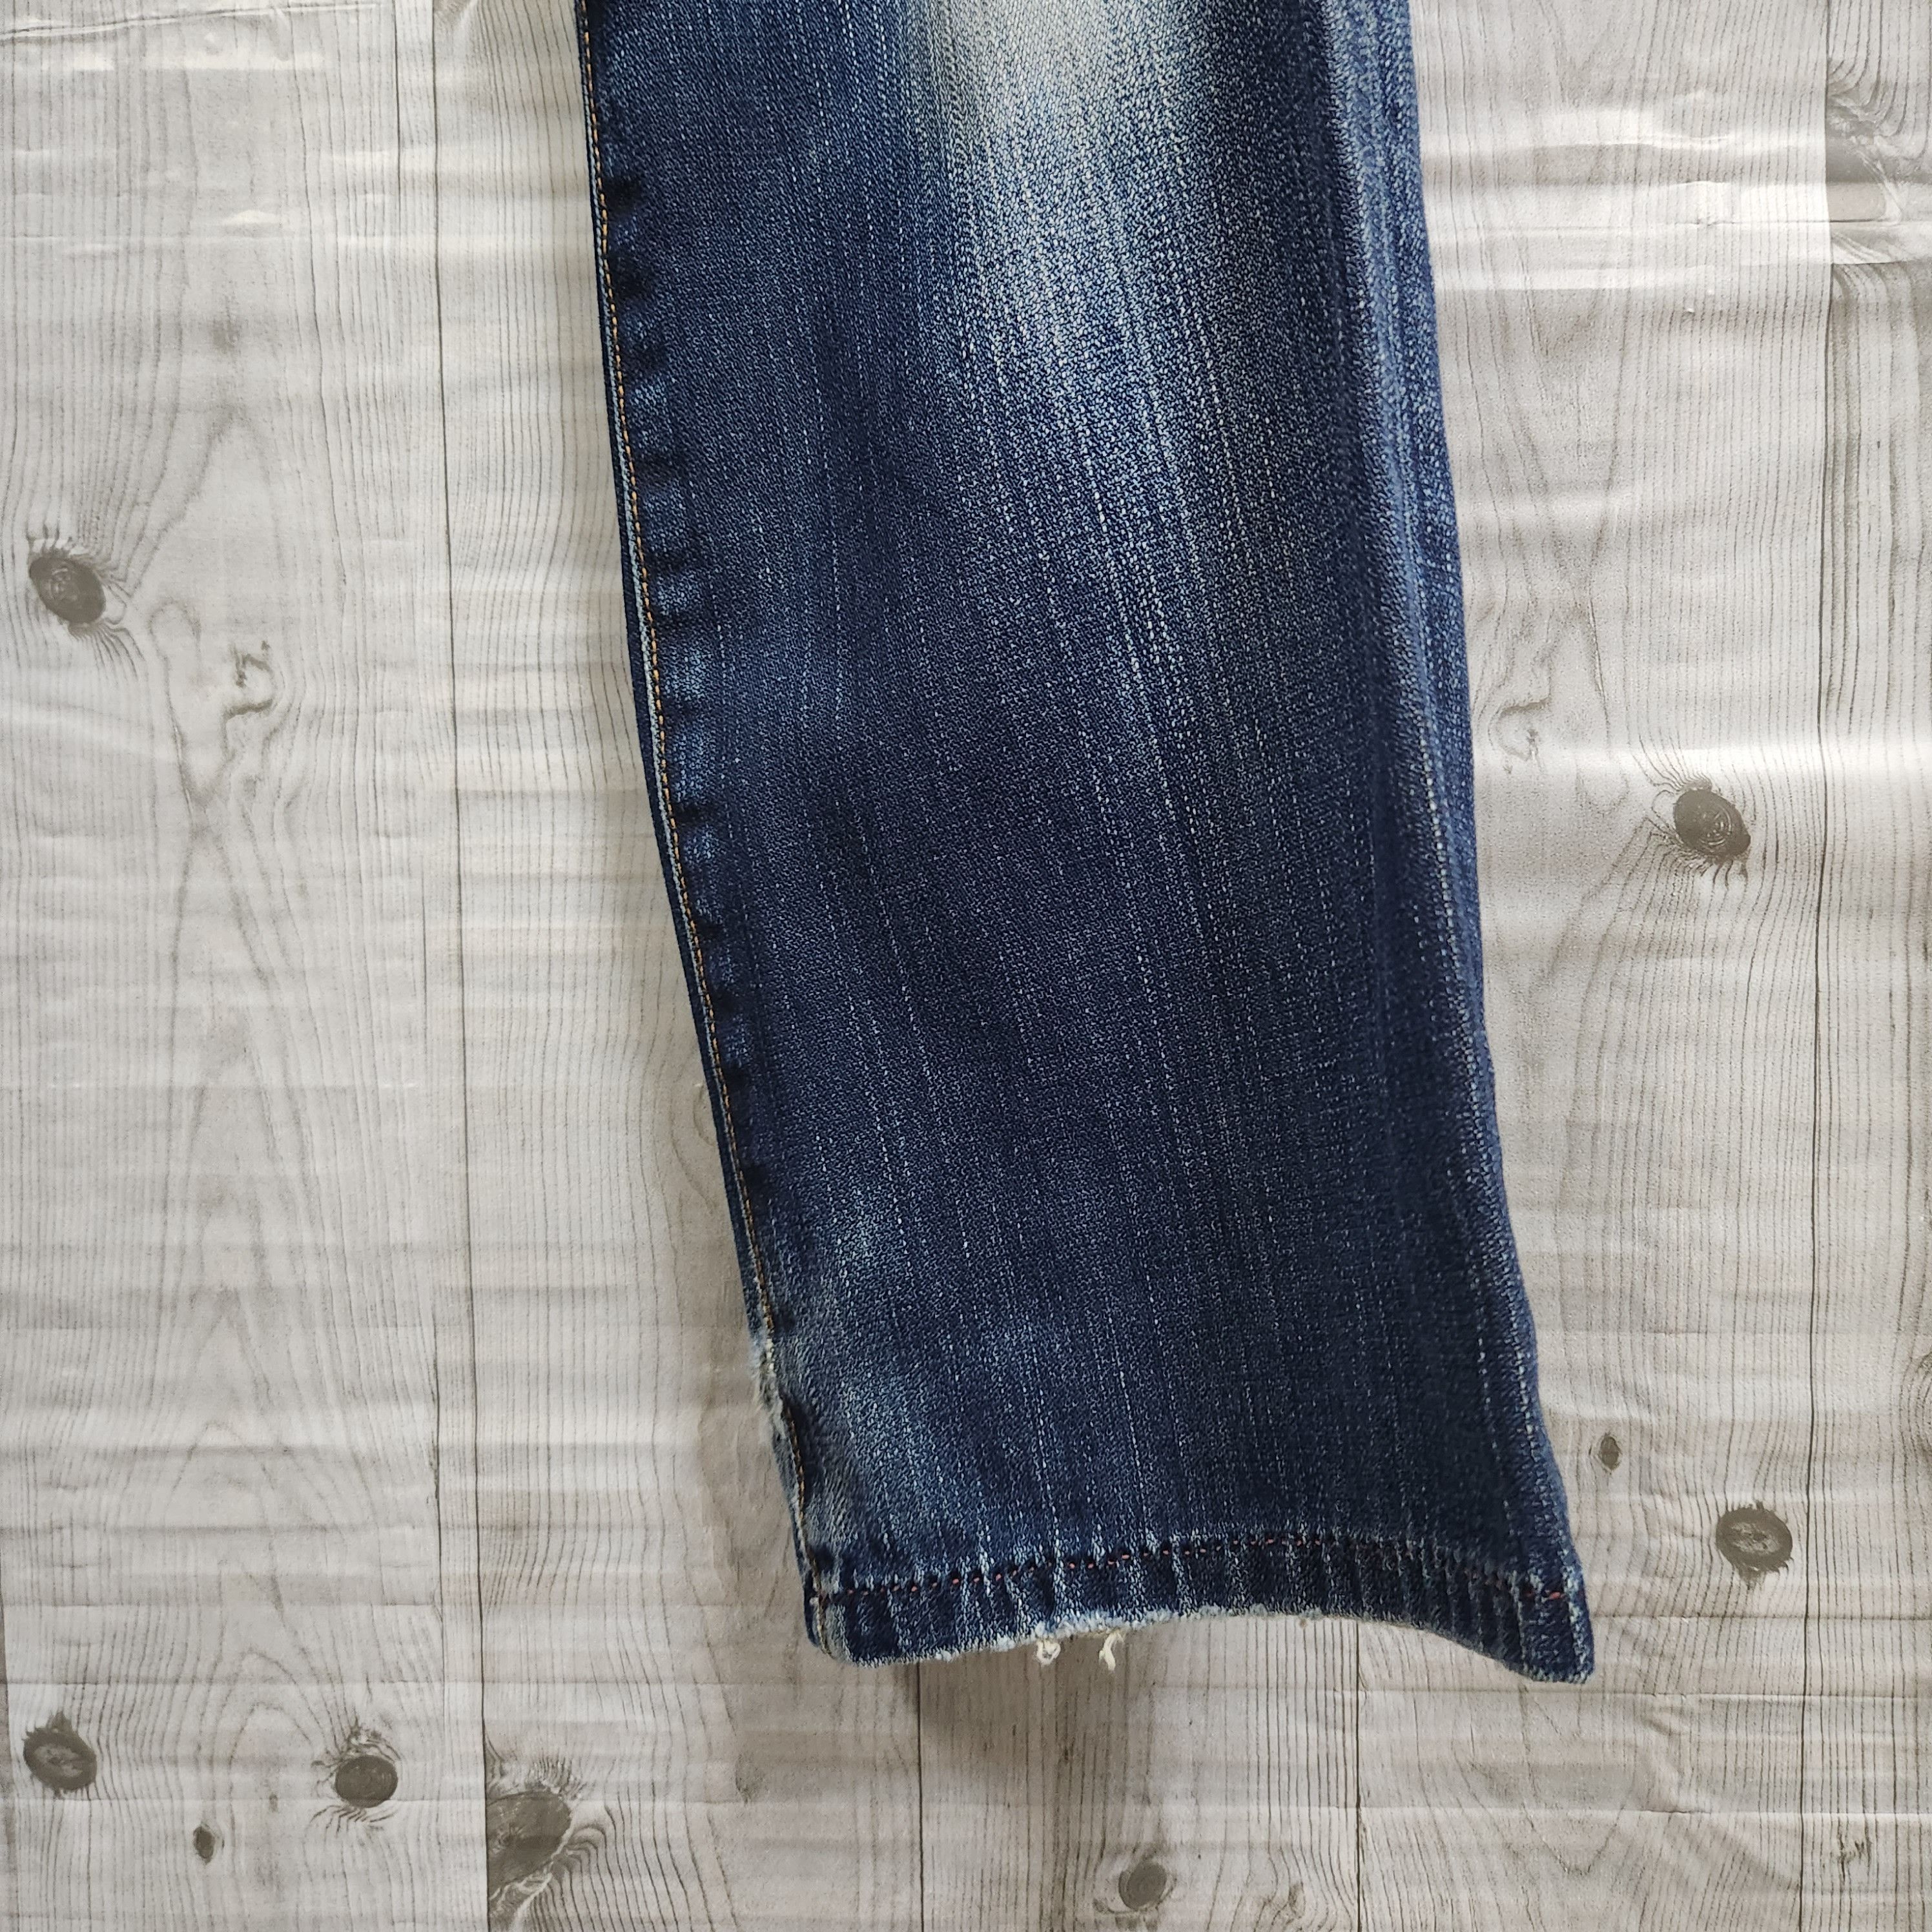 Vintage Levis 517 Premium Denim Jeans Year 2006 - 16